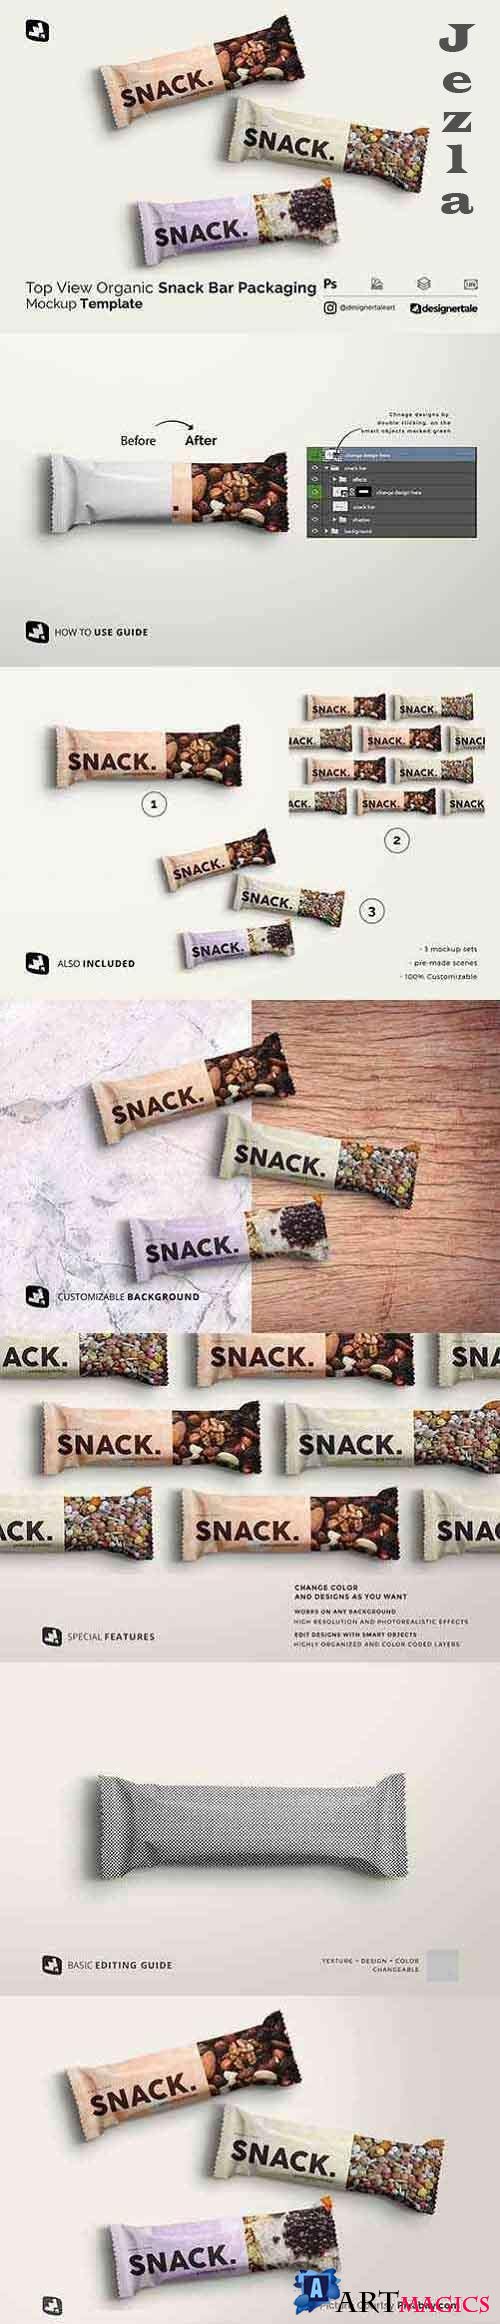 Organic Snack Bar Packaging Mockup - 4836461